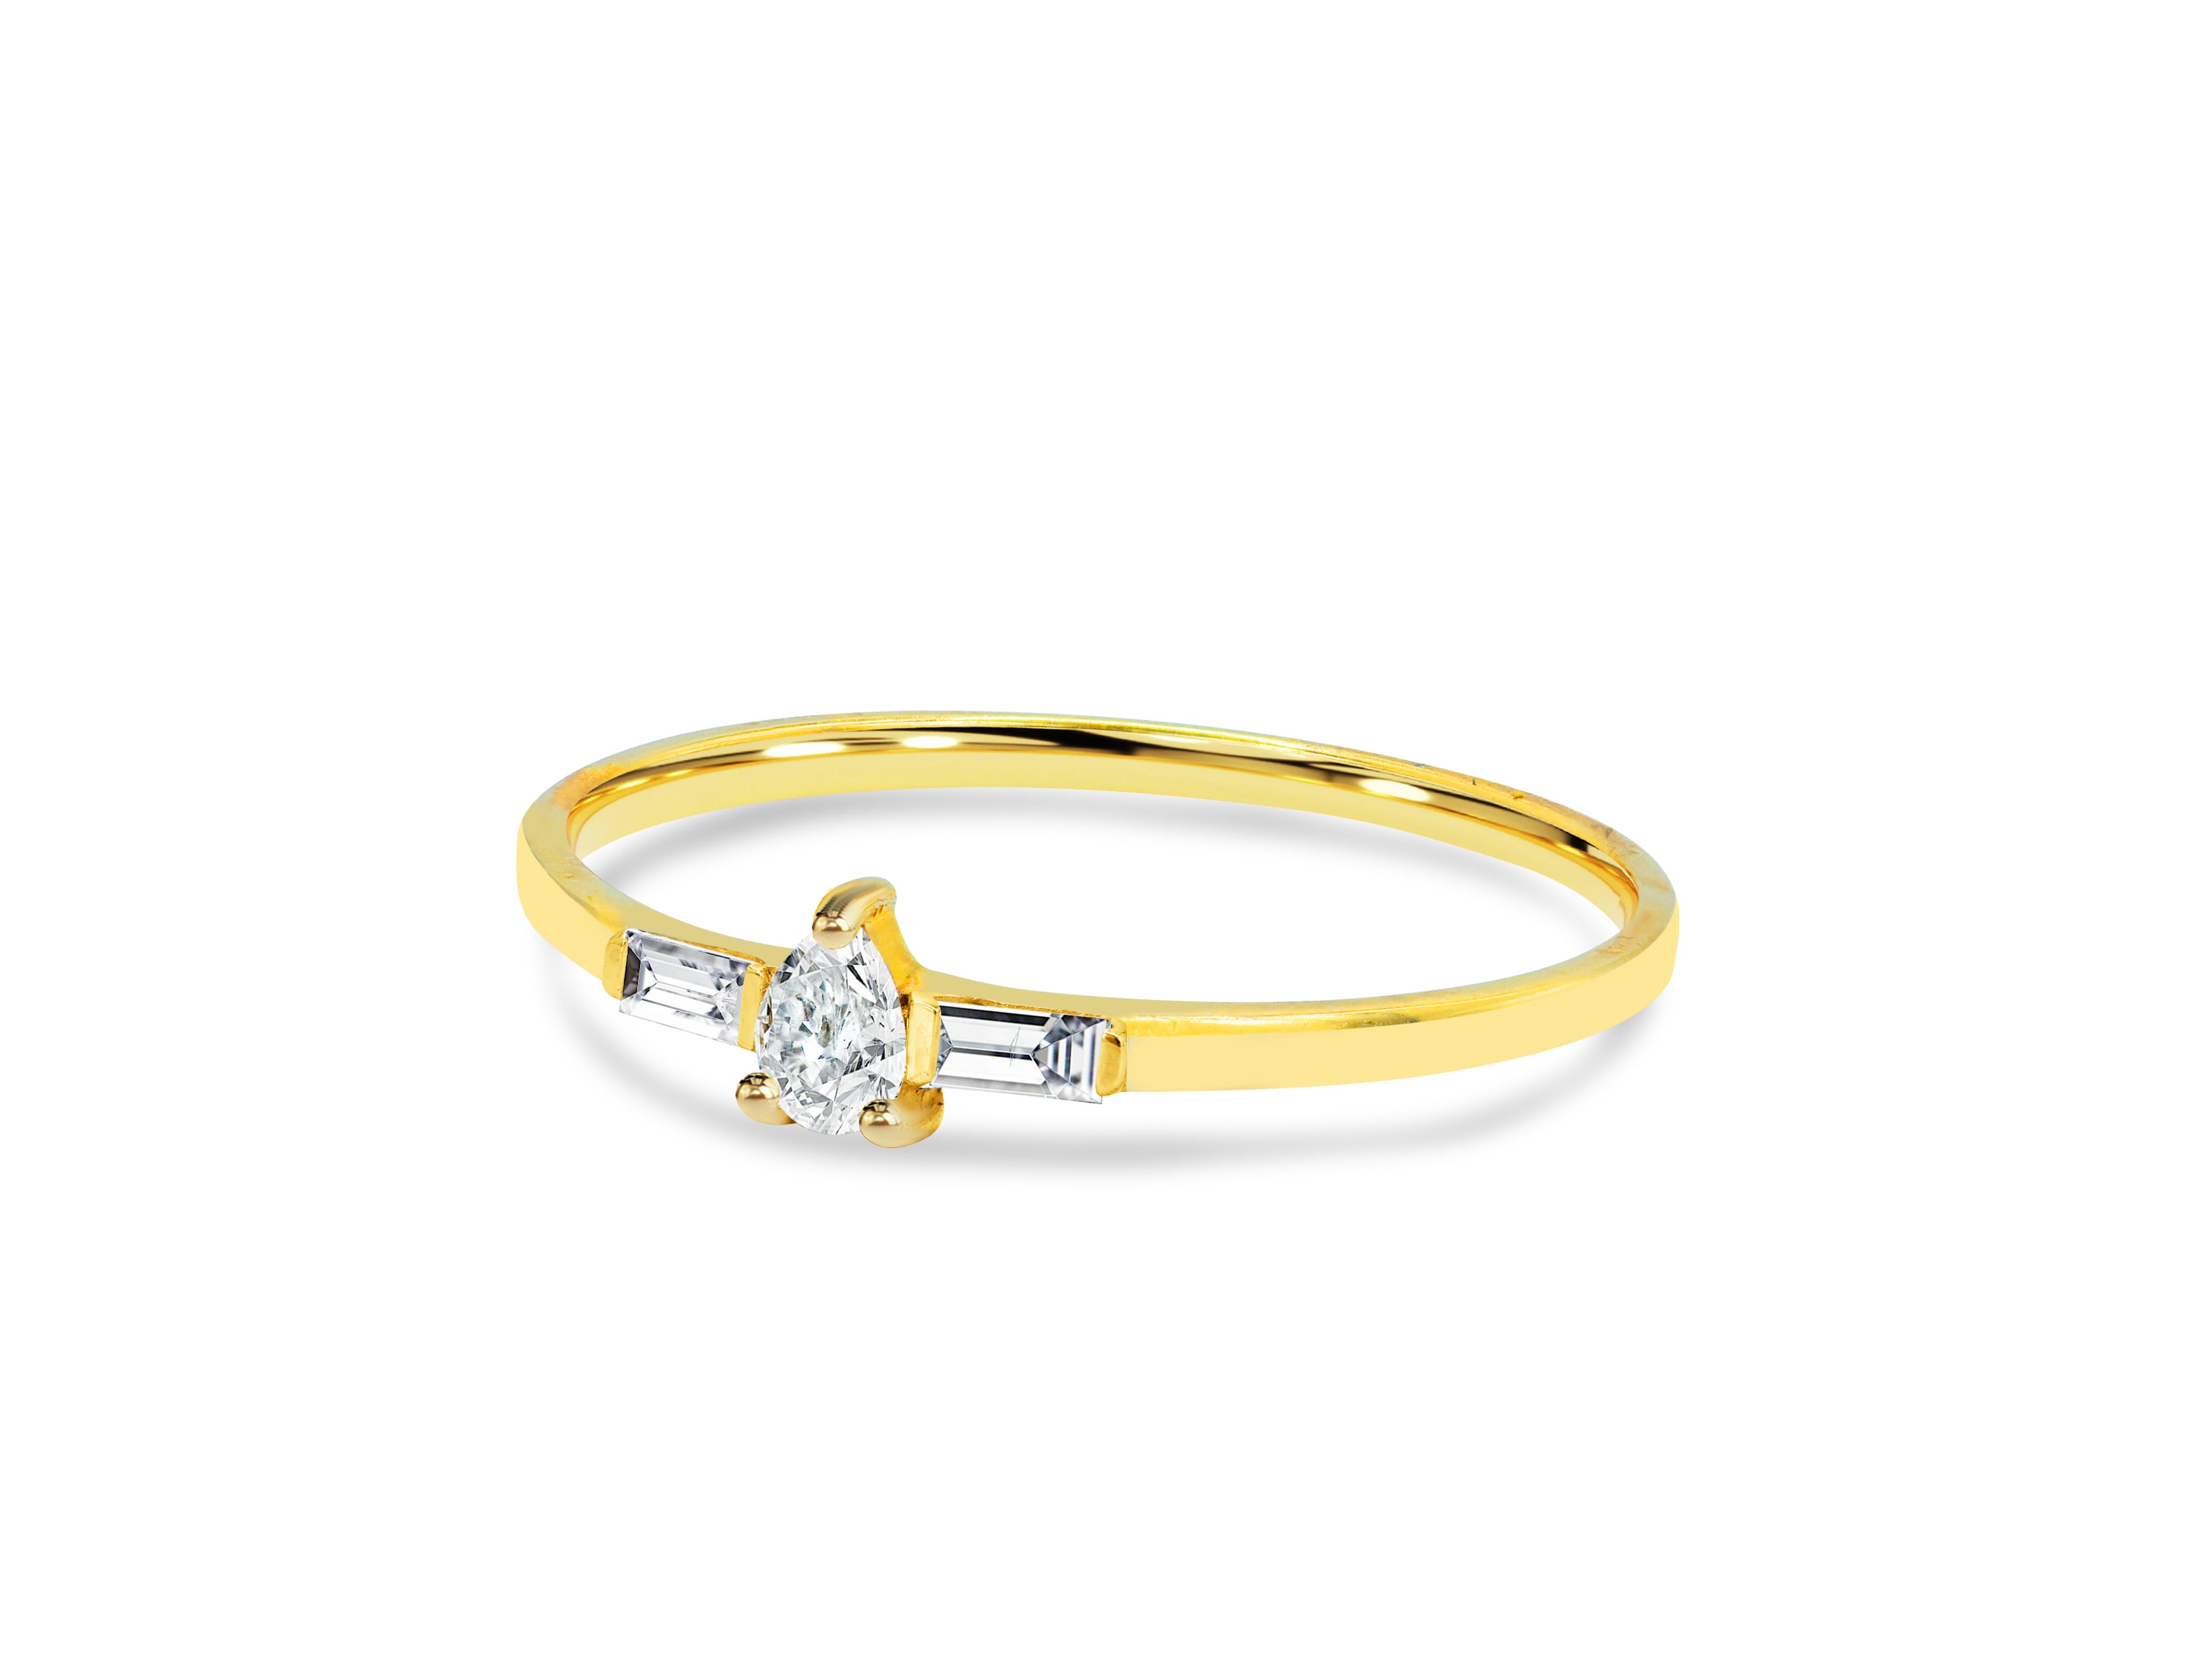 For Sale:  14k Gold Diamond Ring Pear Cut Diamond Ring Baguette Diamond Ring 5